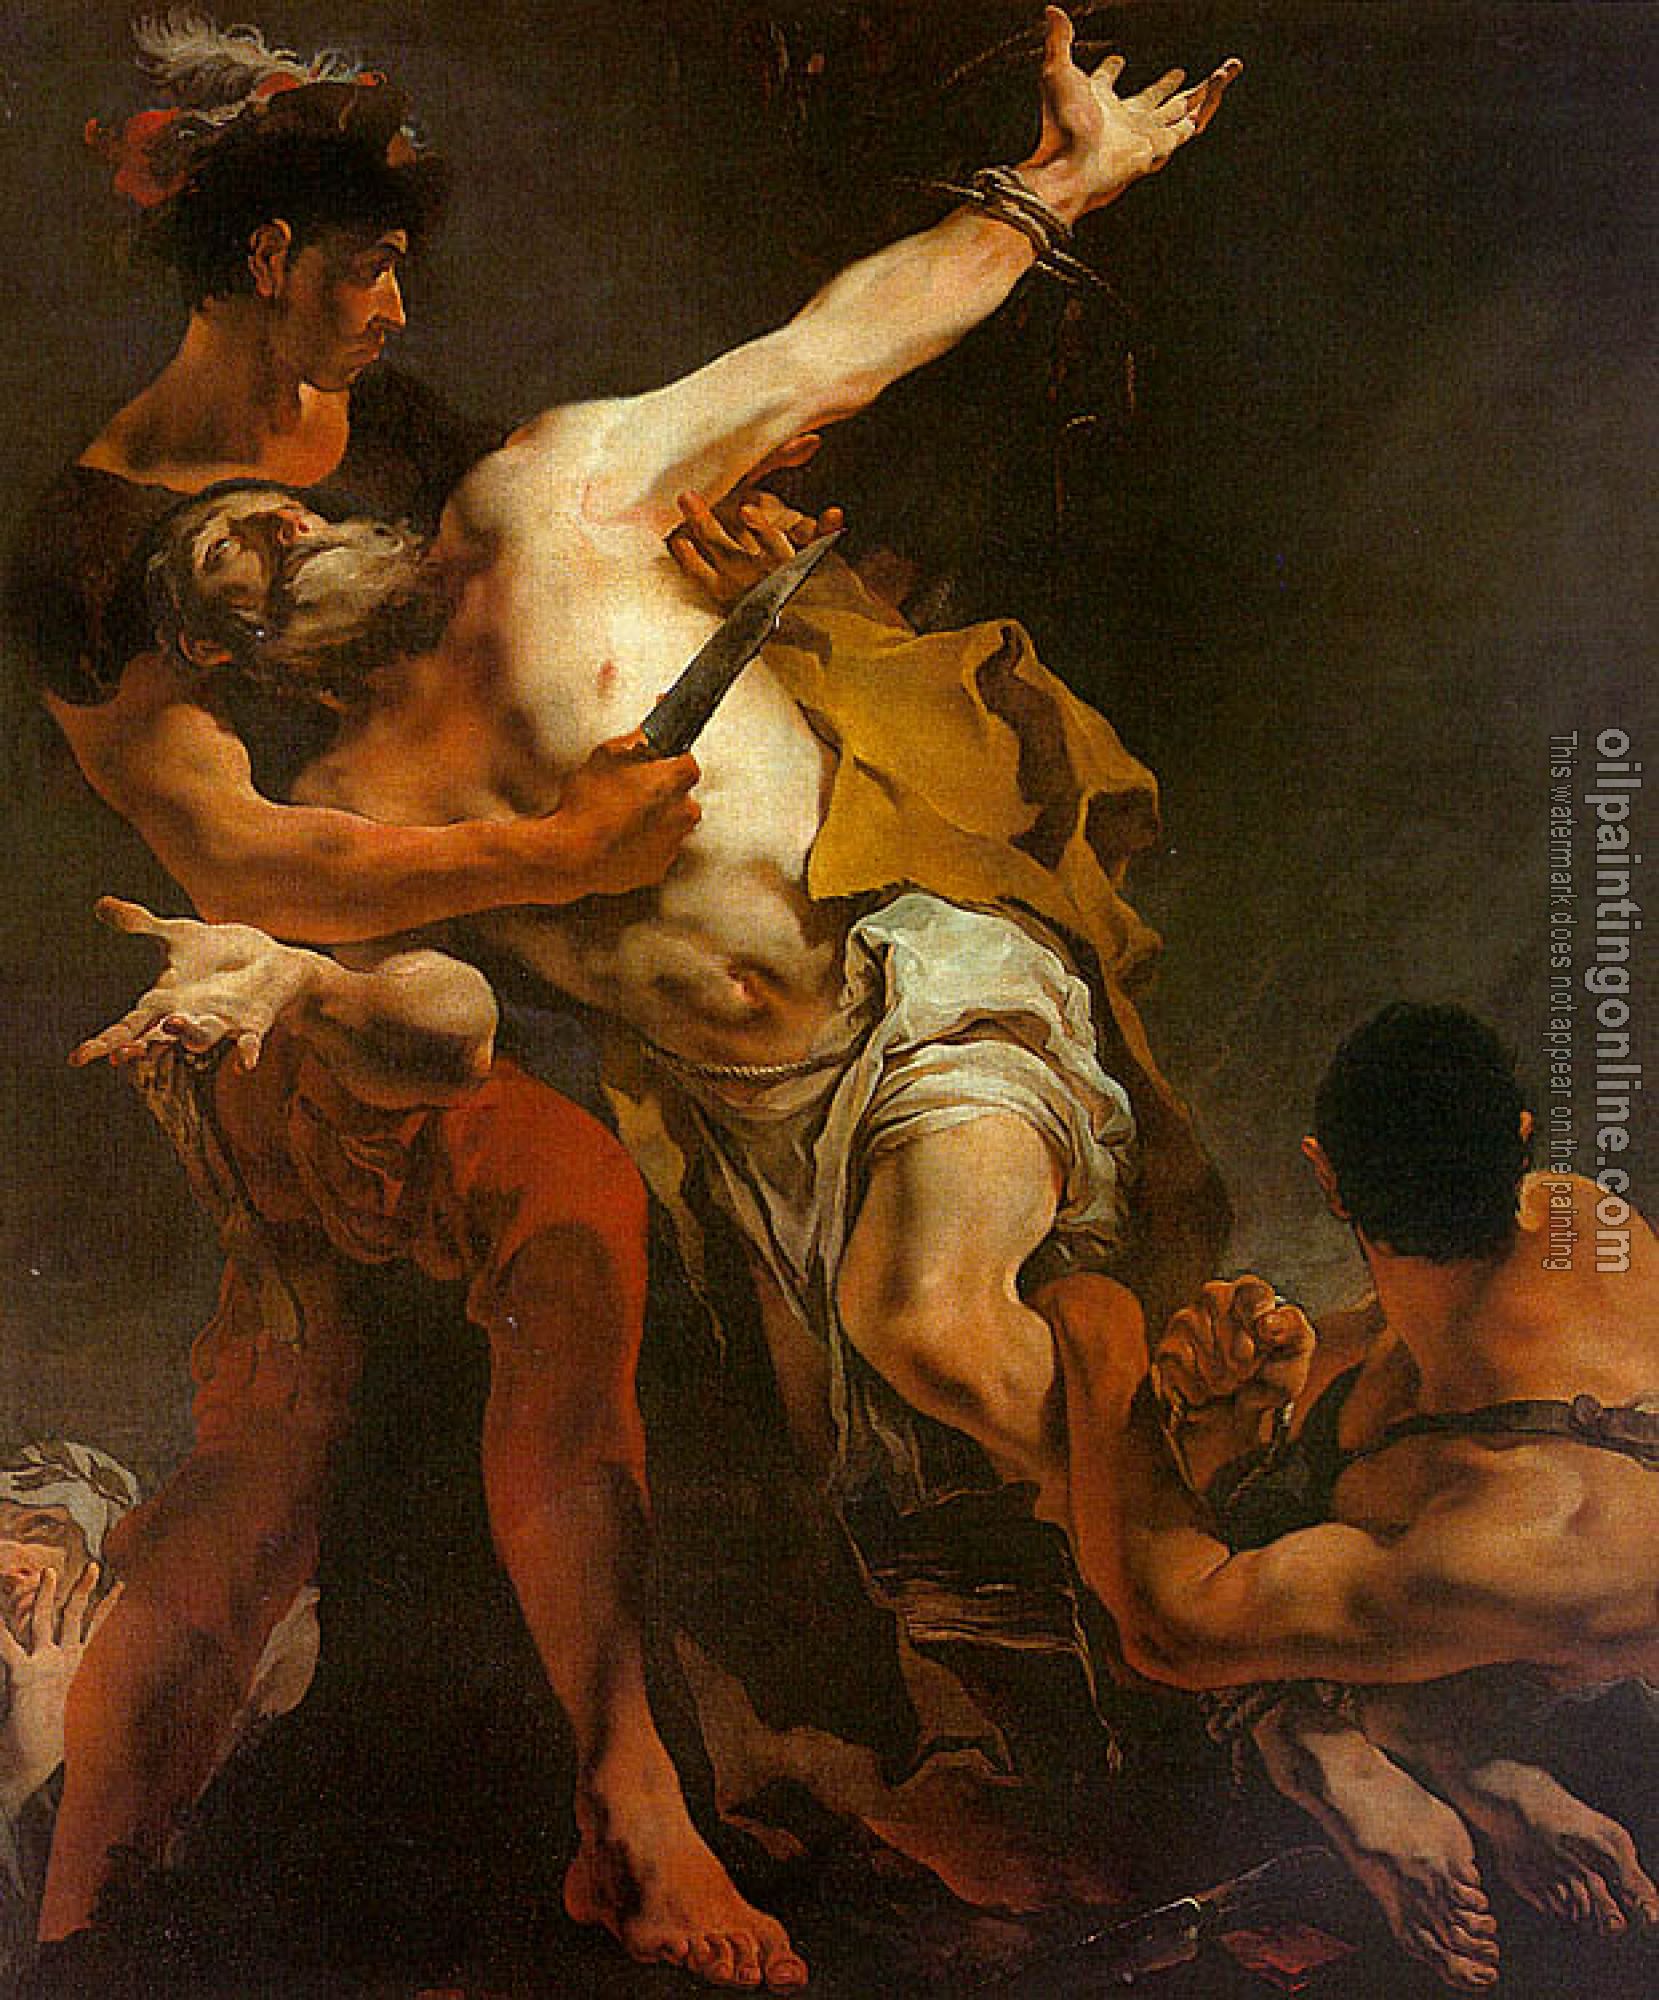 Tiepolo, Giovanni Battista - The Martyrdom of St